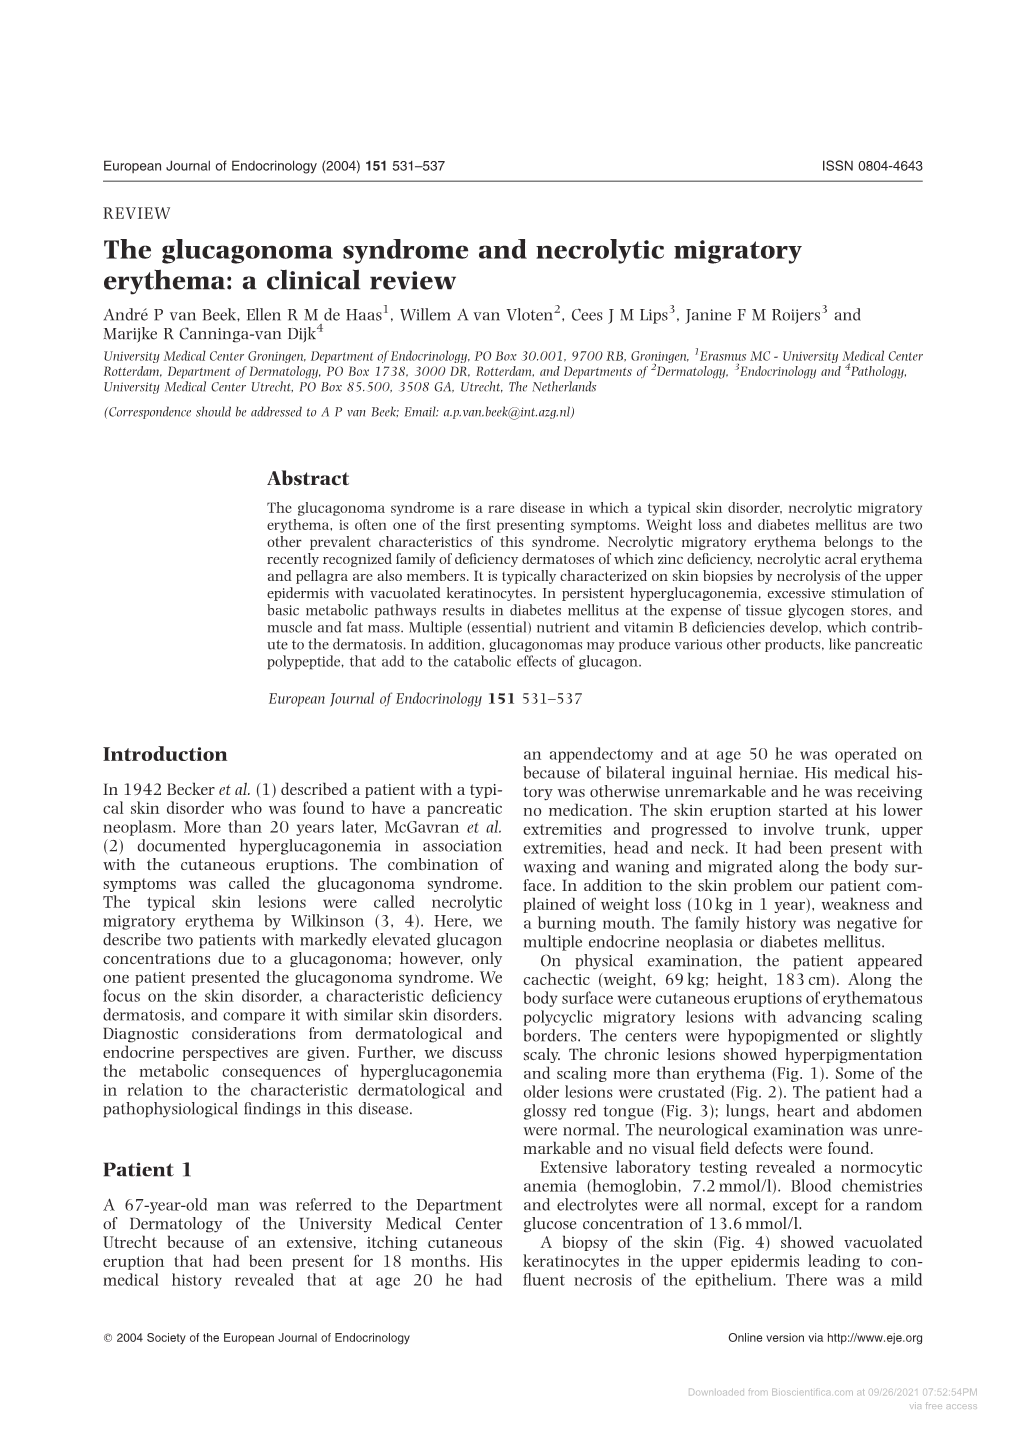 The Glucagonoma Syndrome and Necrolytic Migratory Erythema